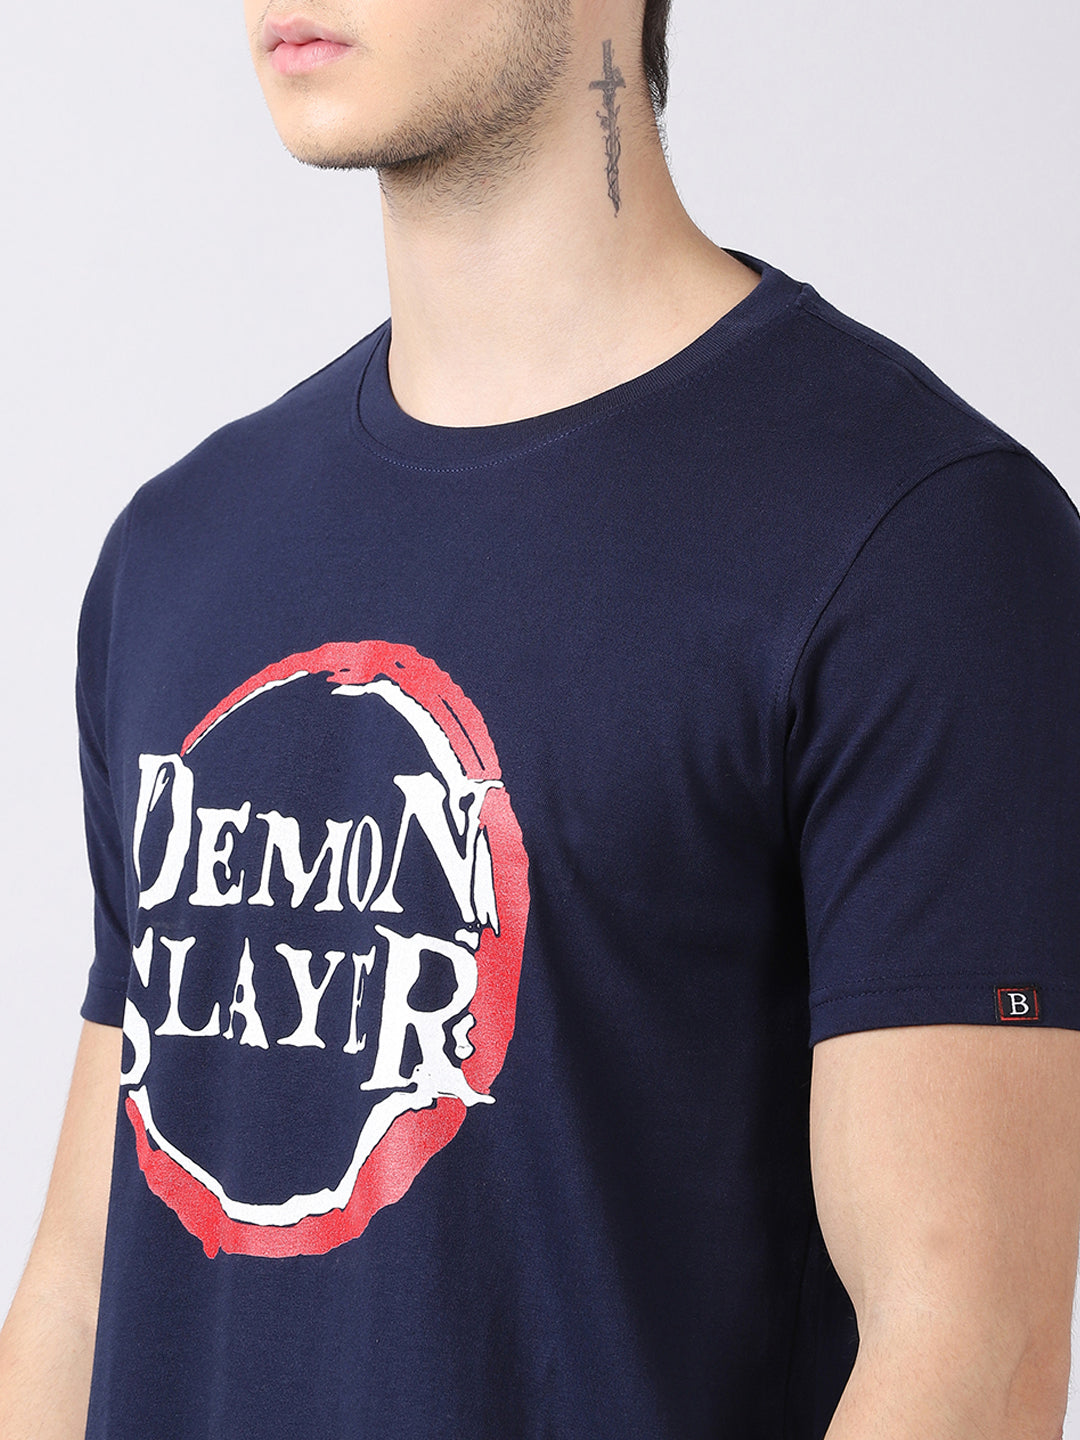 Demon Slayer Anime T-Shirt Graphic T-Shirts Bushirt   